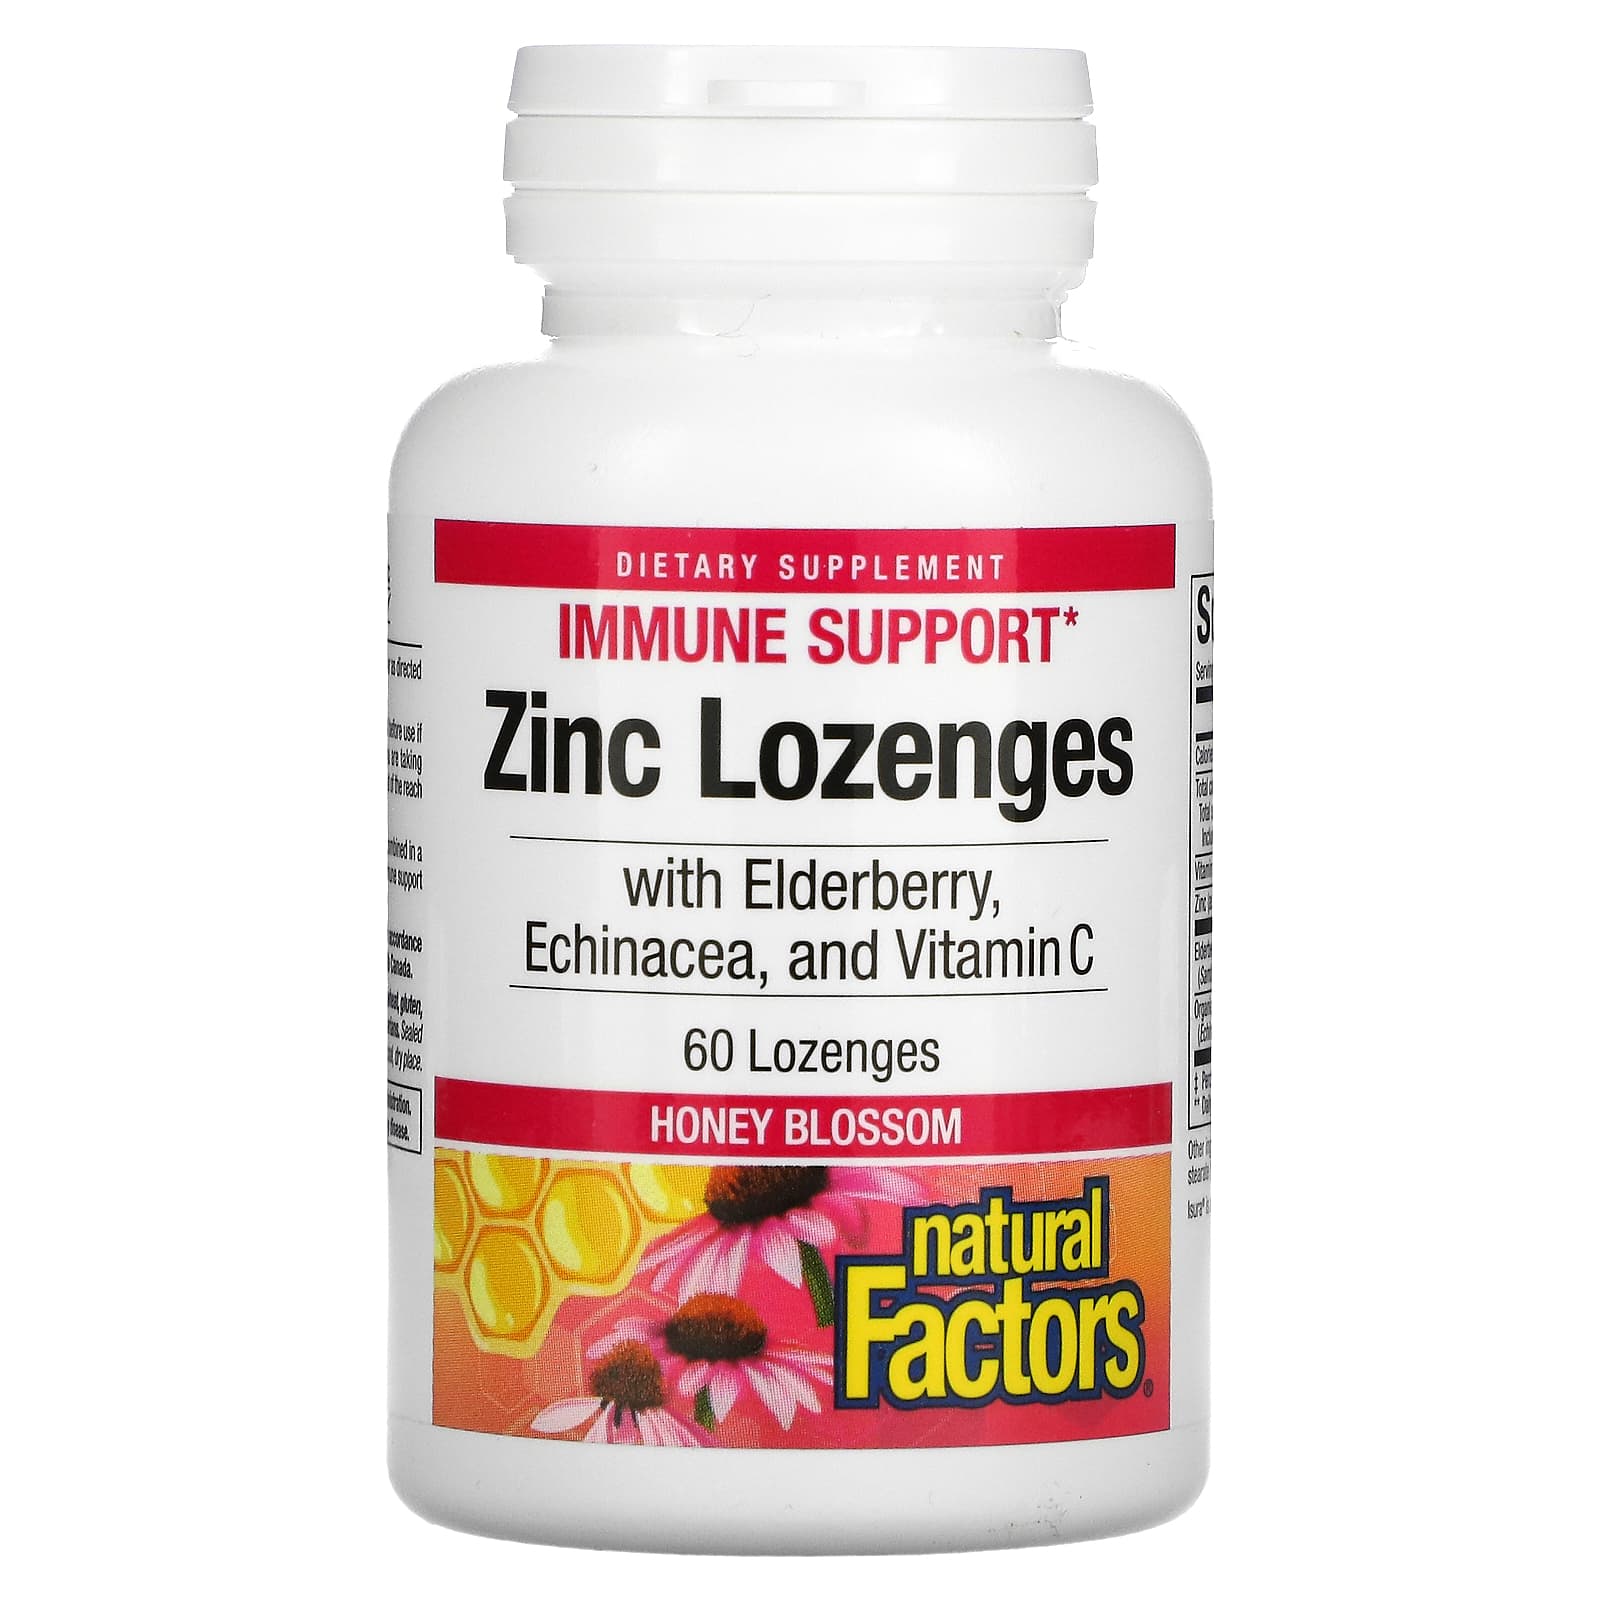 Zinc Lozenges with Elderberry, Echinacea, & Vitamin C (60 Lozenges)